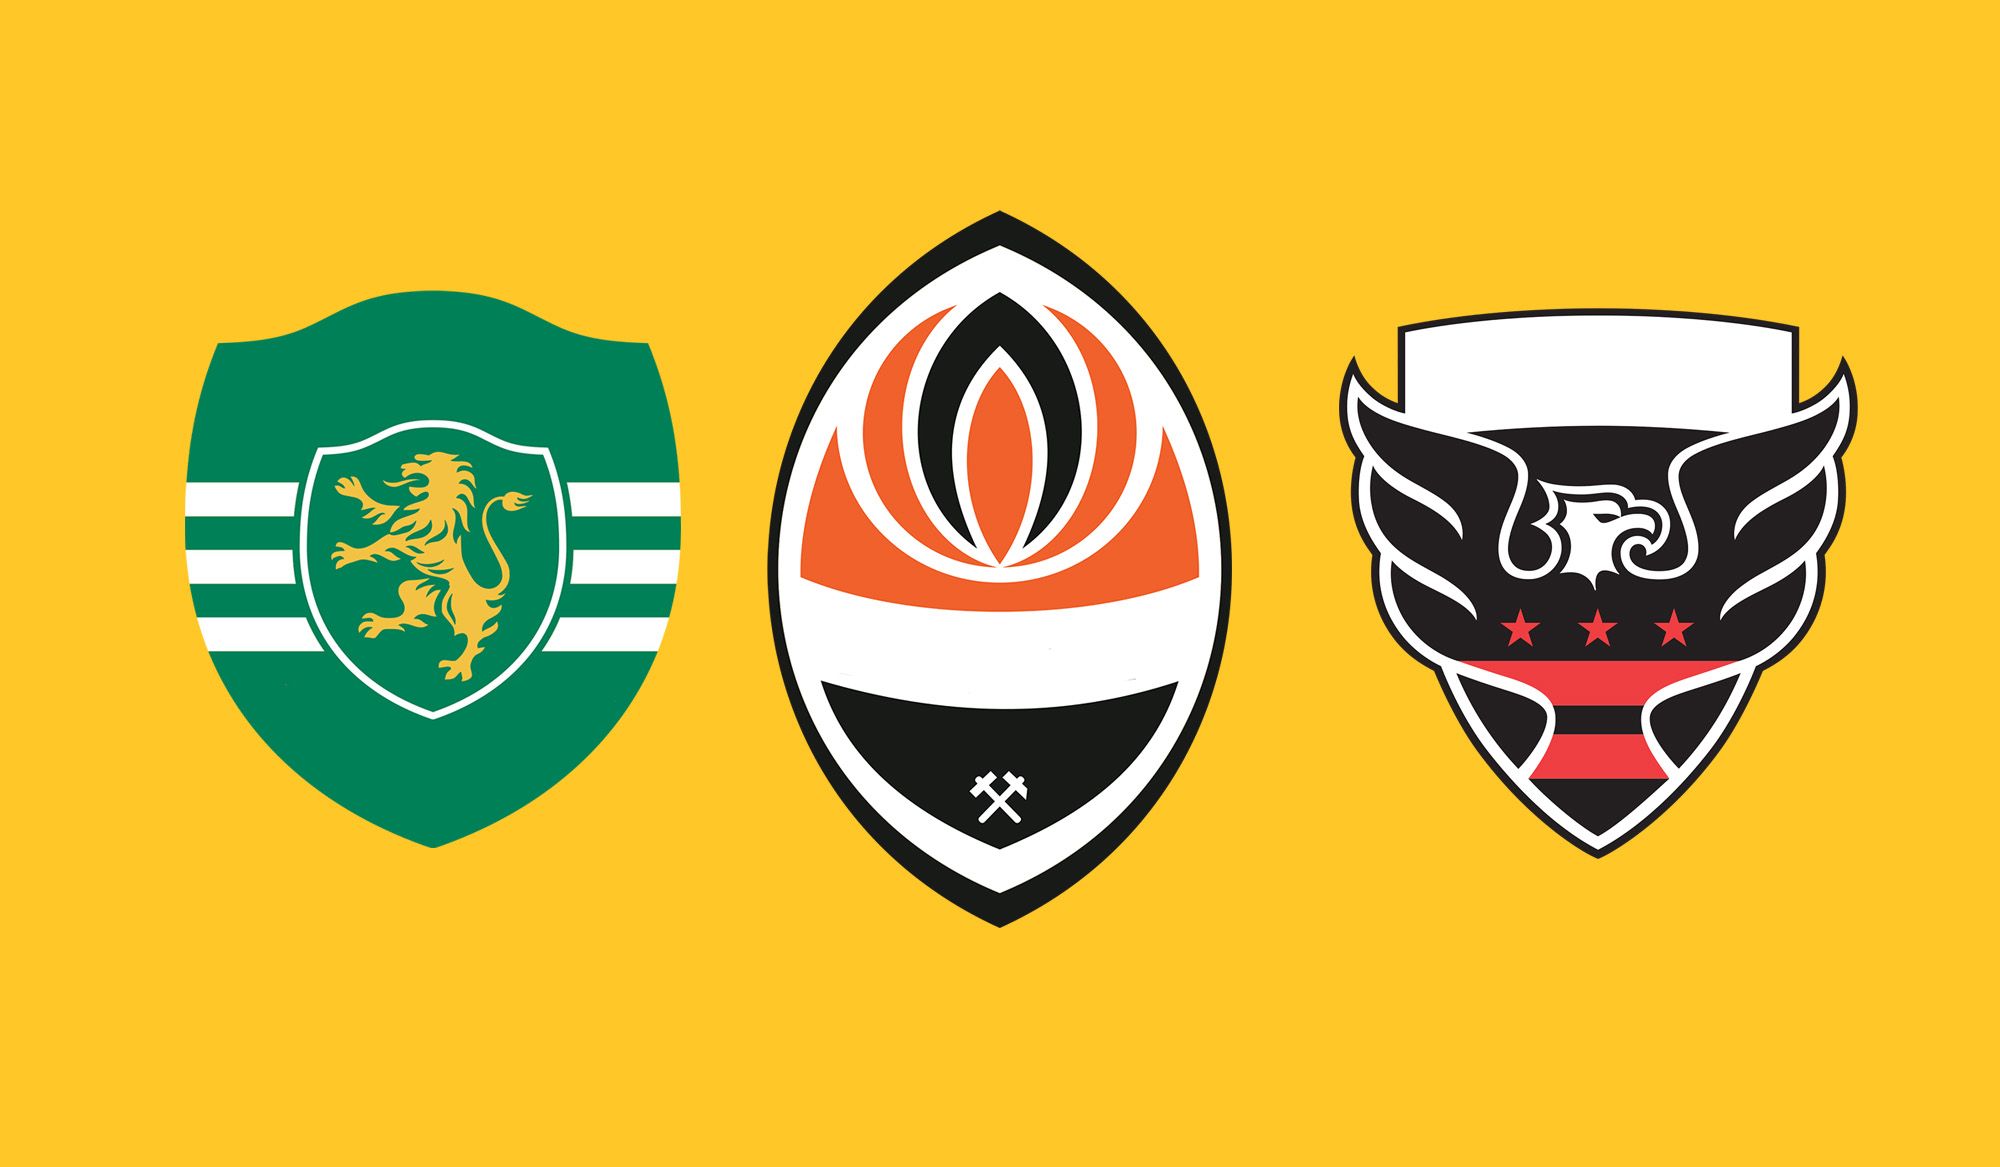 Guess 100 Football Club Logos in 10 Minutes (Football Quiz) 